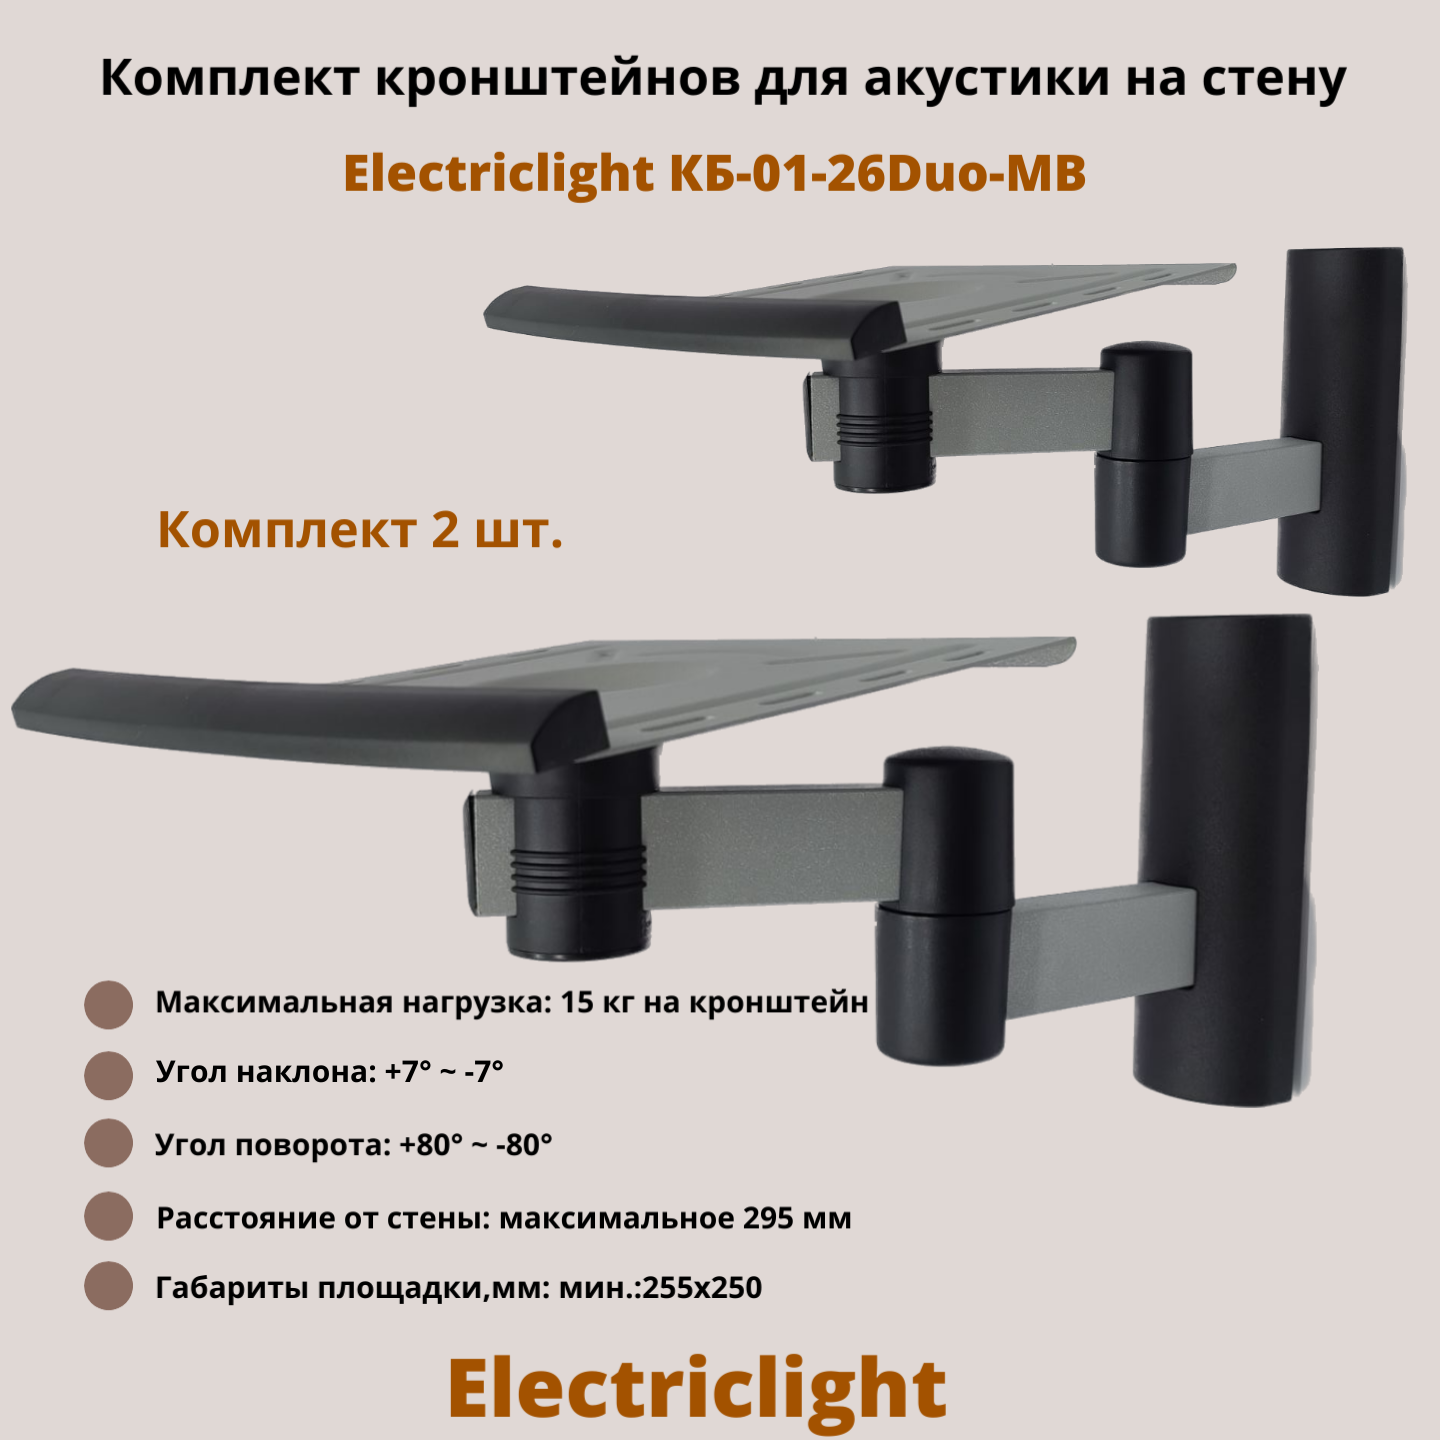 Кронштейн для акустики на стену наклонно-поворотный Electriclight КБ-01-26Duo-MB, металлик/черный